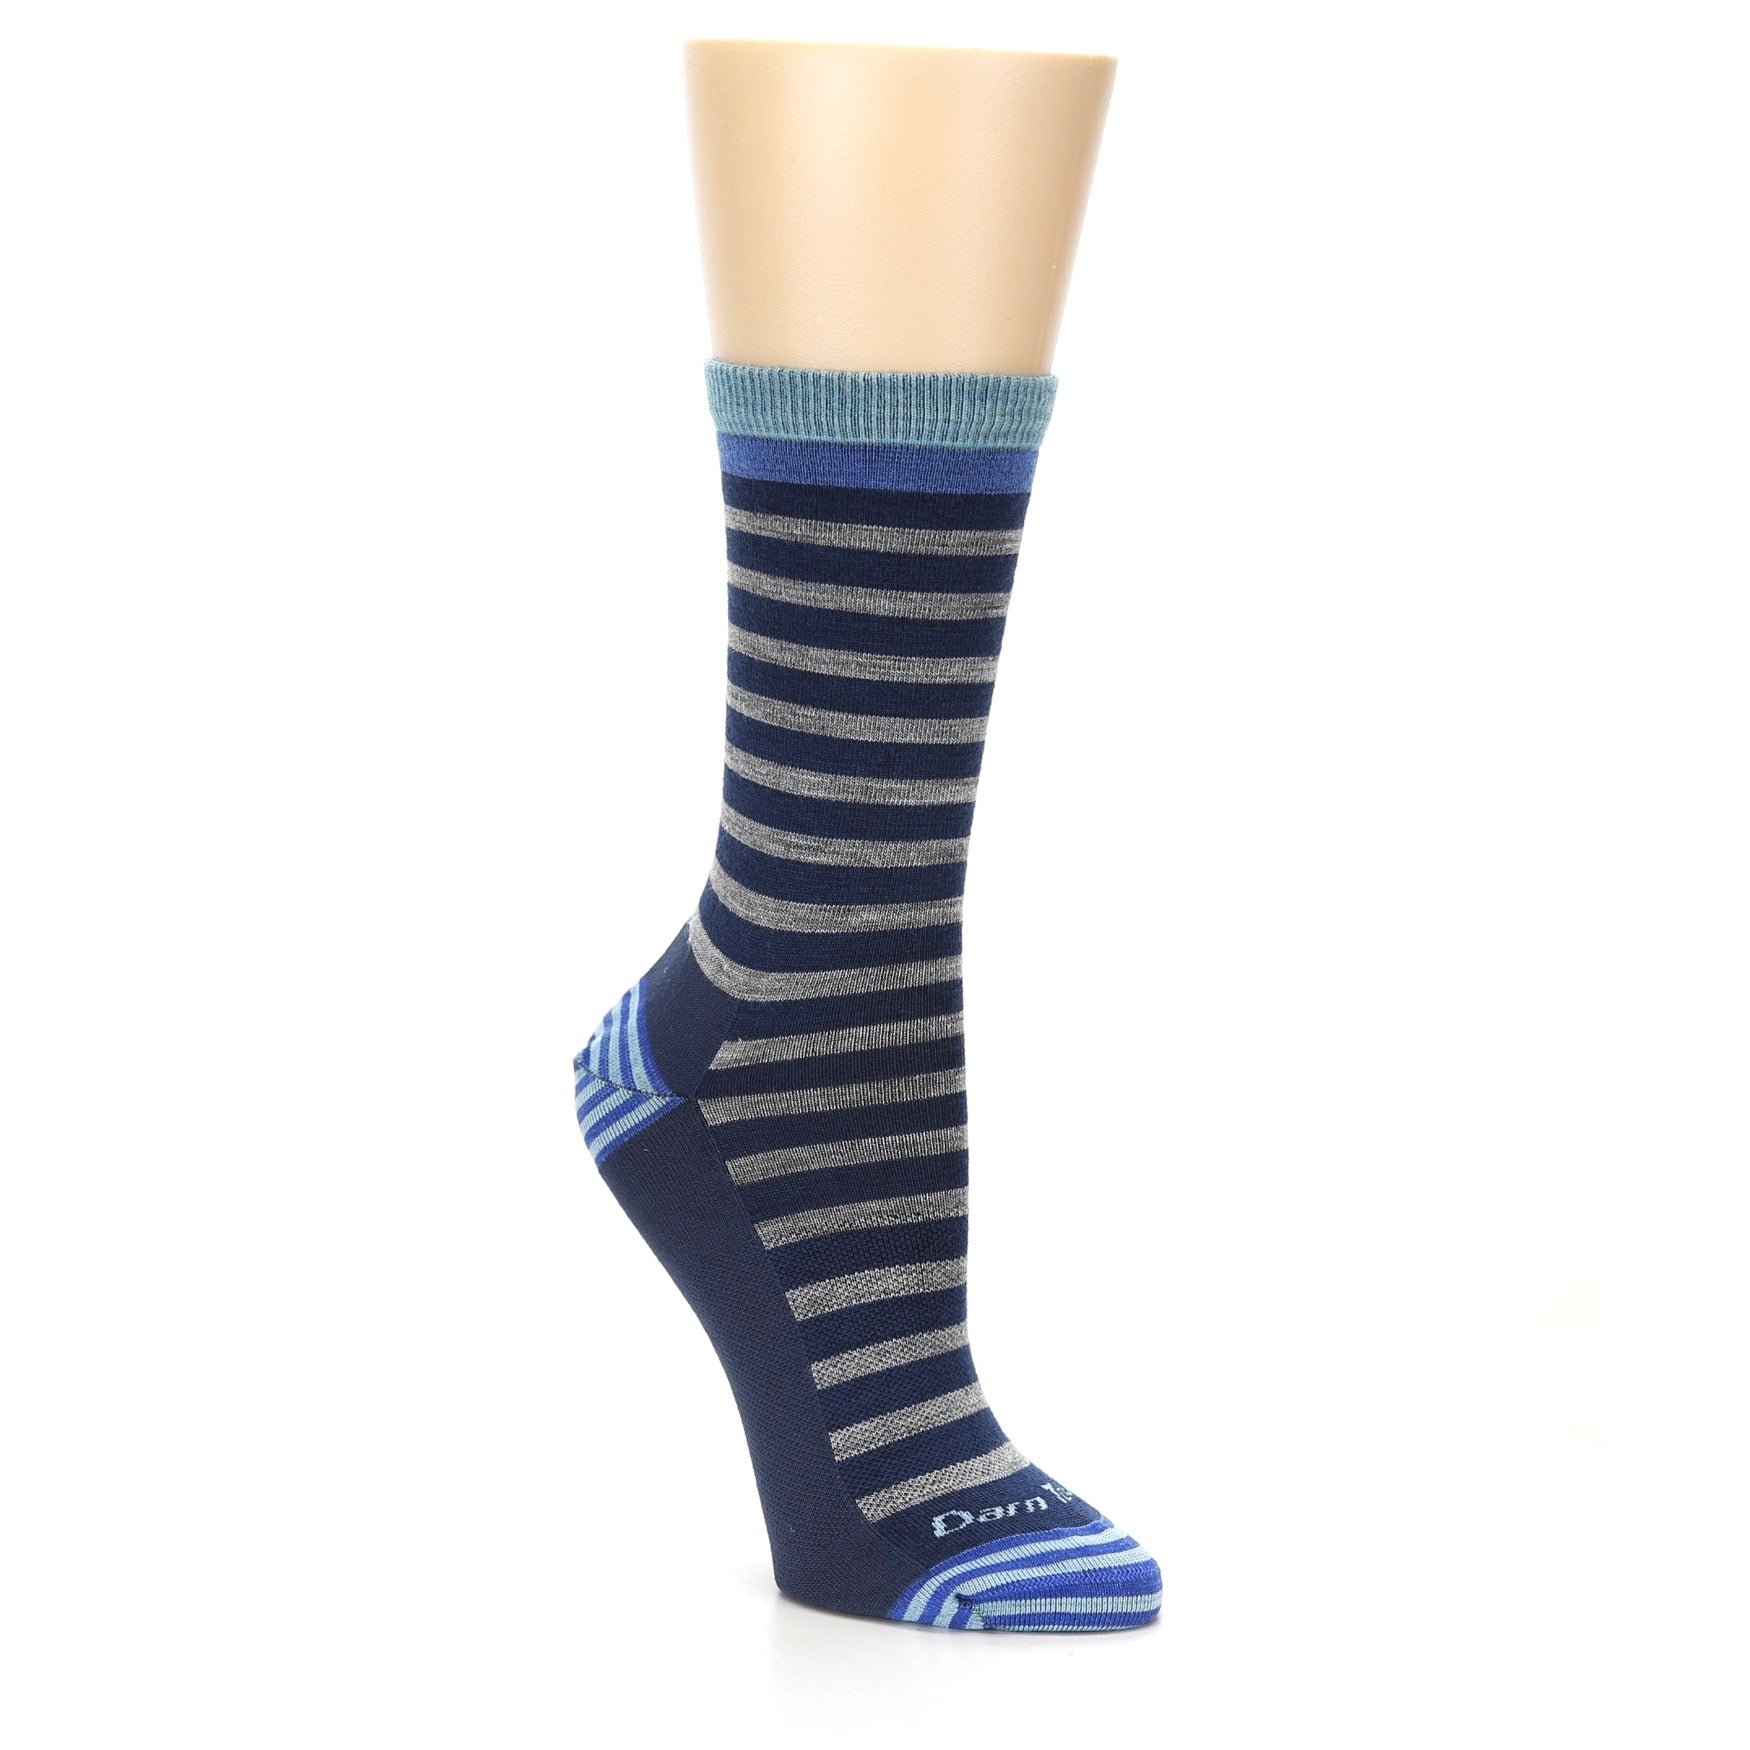 Morgan Crew Midnight Merino Wool Socks - Women's Lifestyle Socks